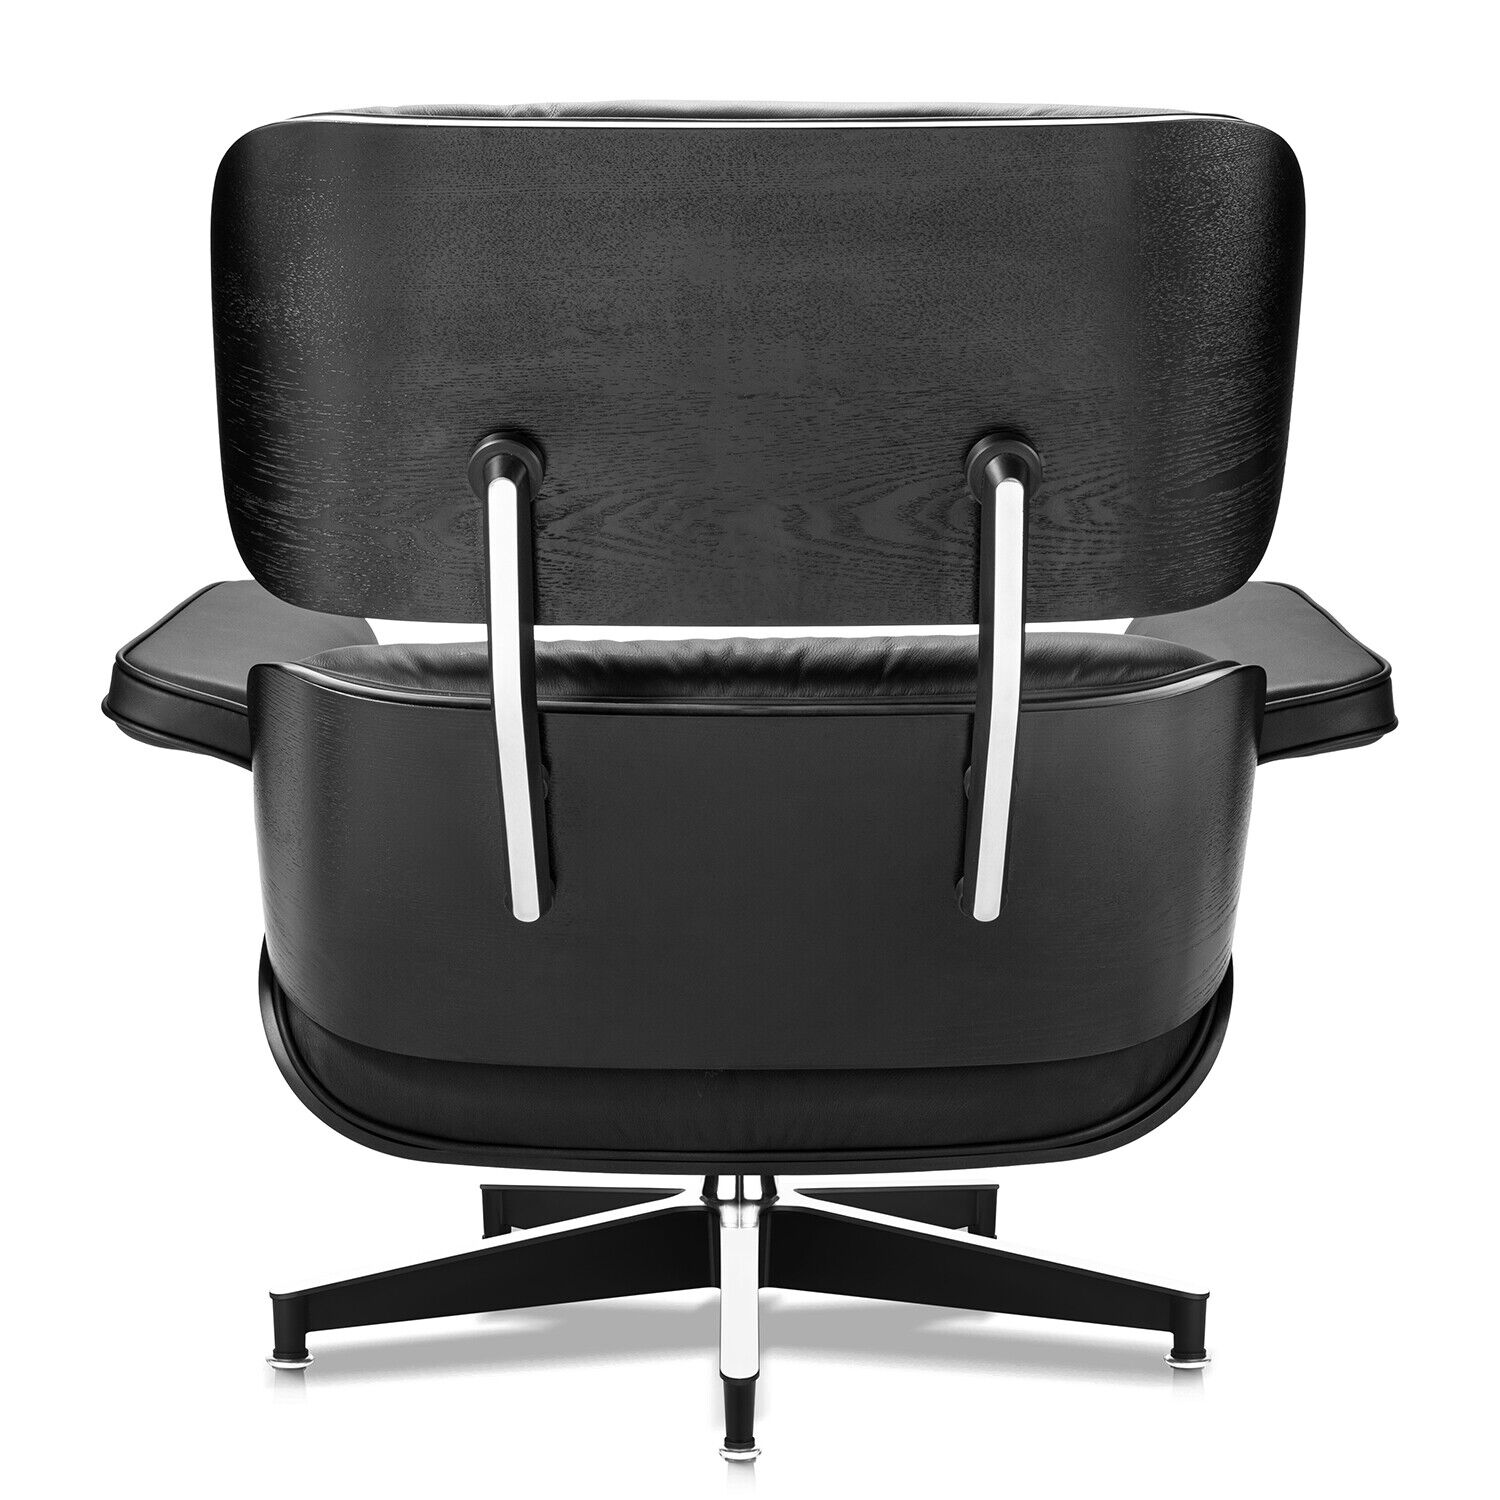 2022 Klassischer Eames Lounge Chair und Ottomane Echtes Leder Sessel Drehstuhl